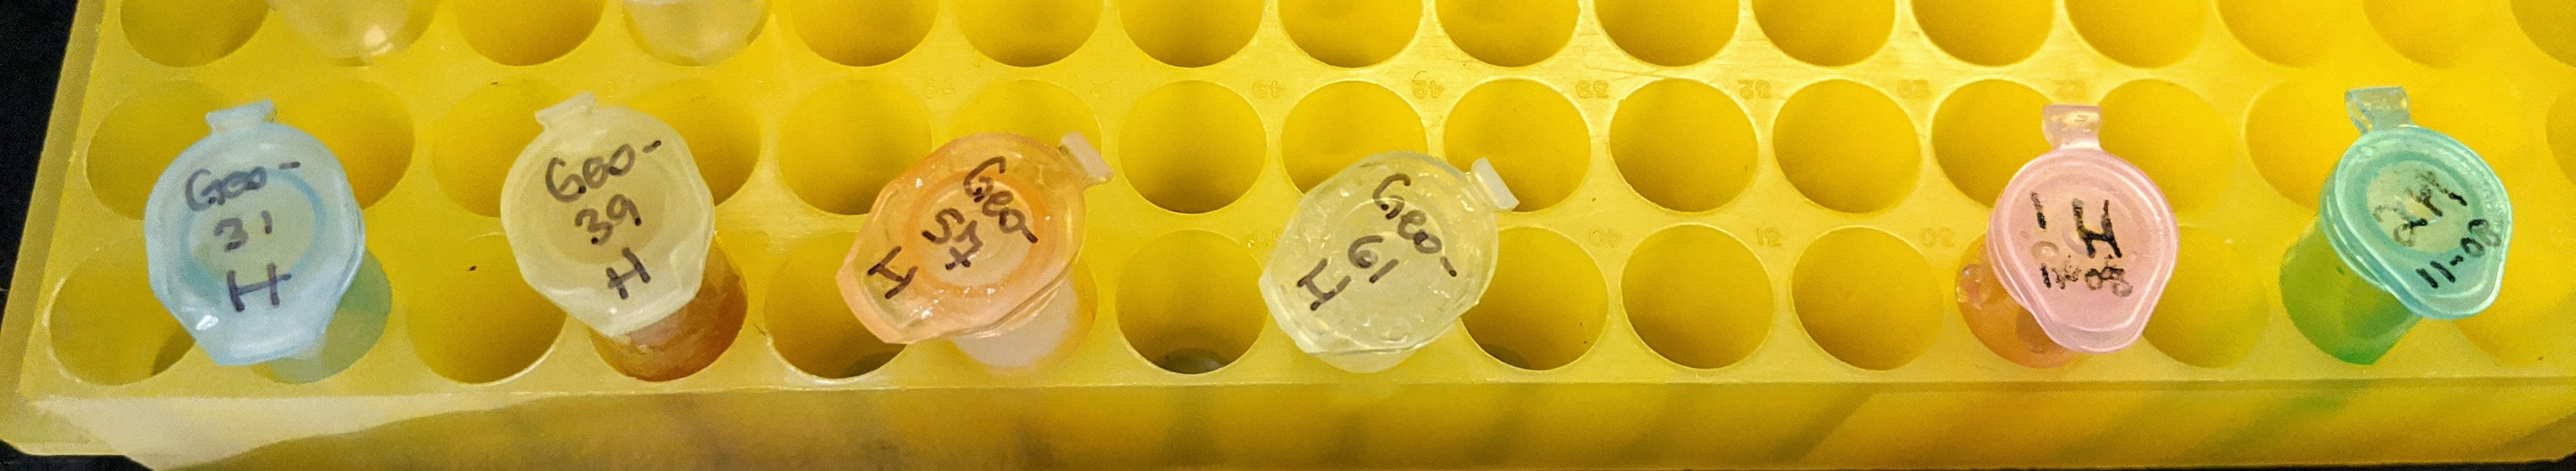 Hemo samples used for RNA isolation in tube rack